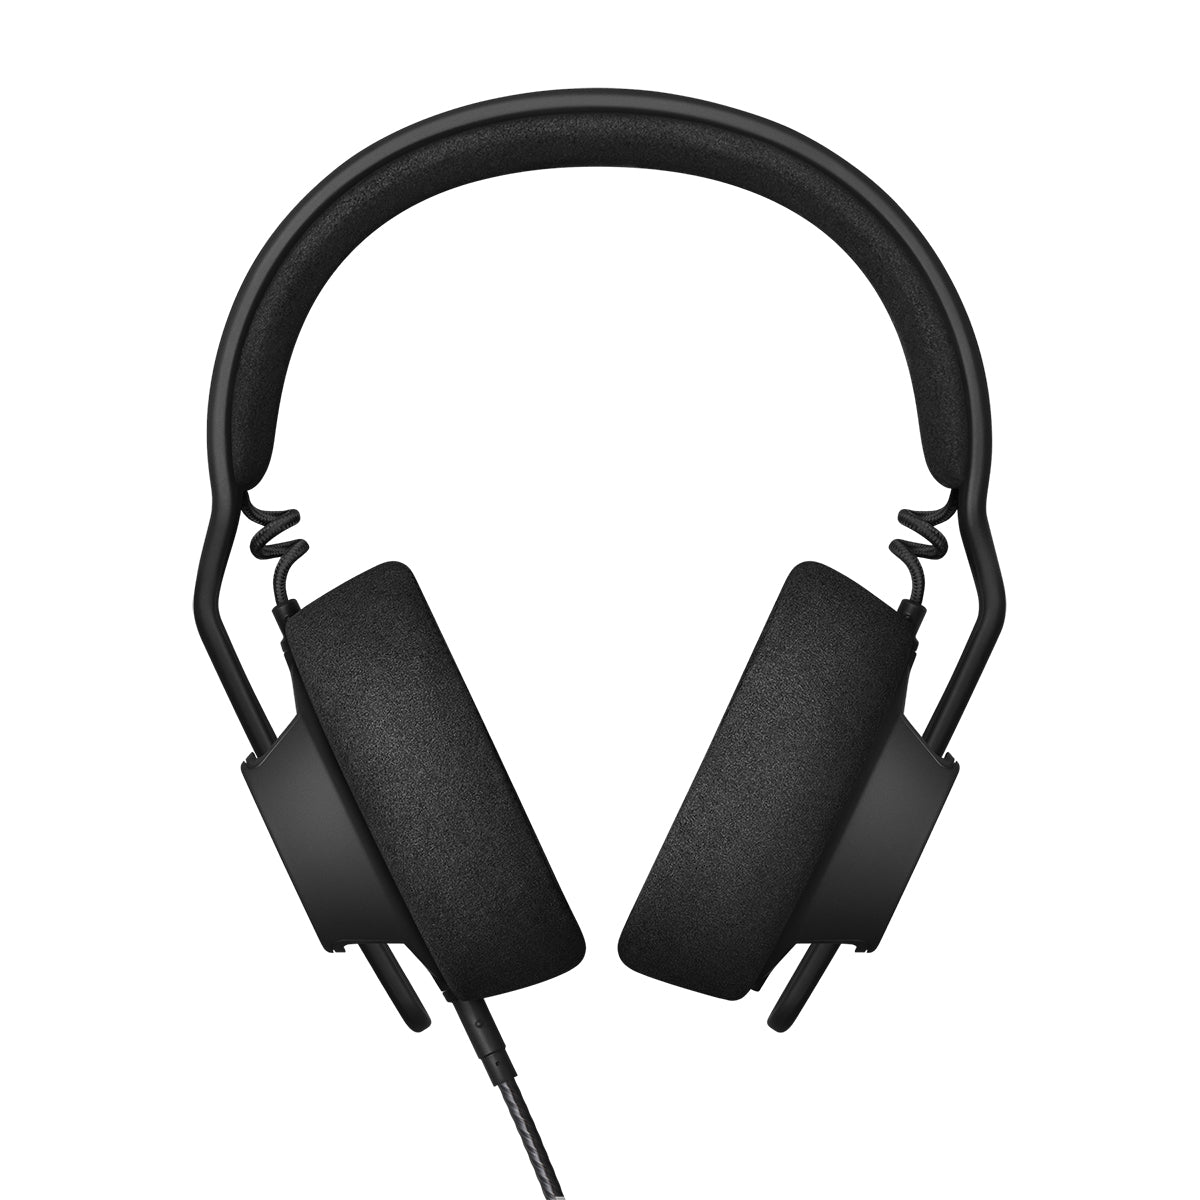 AIAIAI TMA-2 Studio Headphones